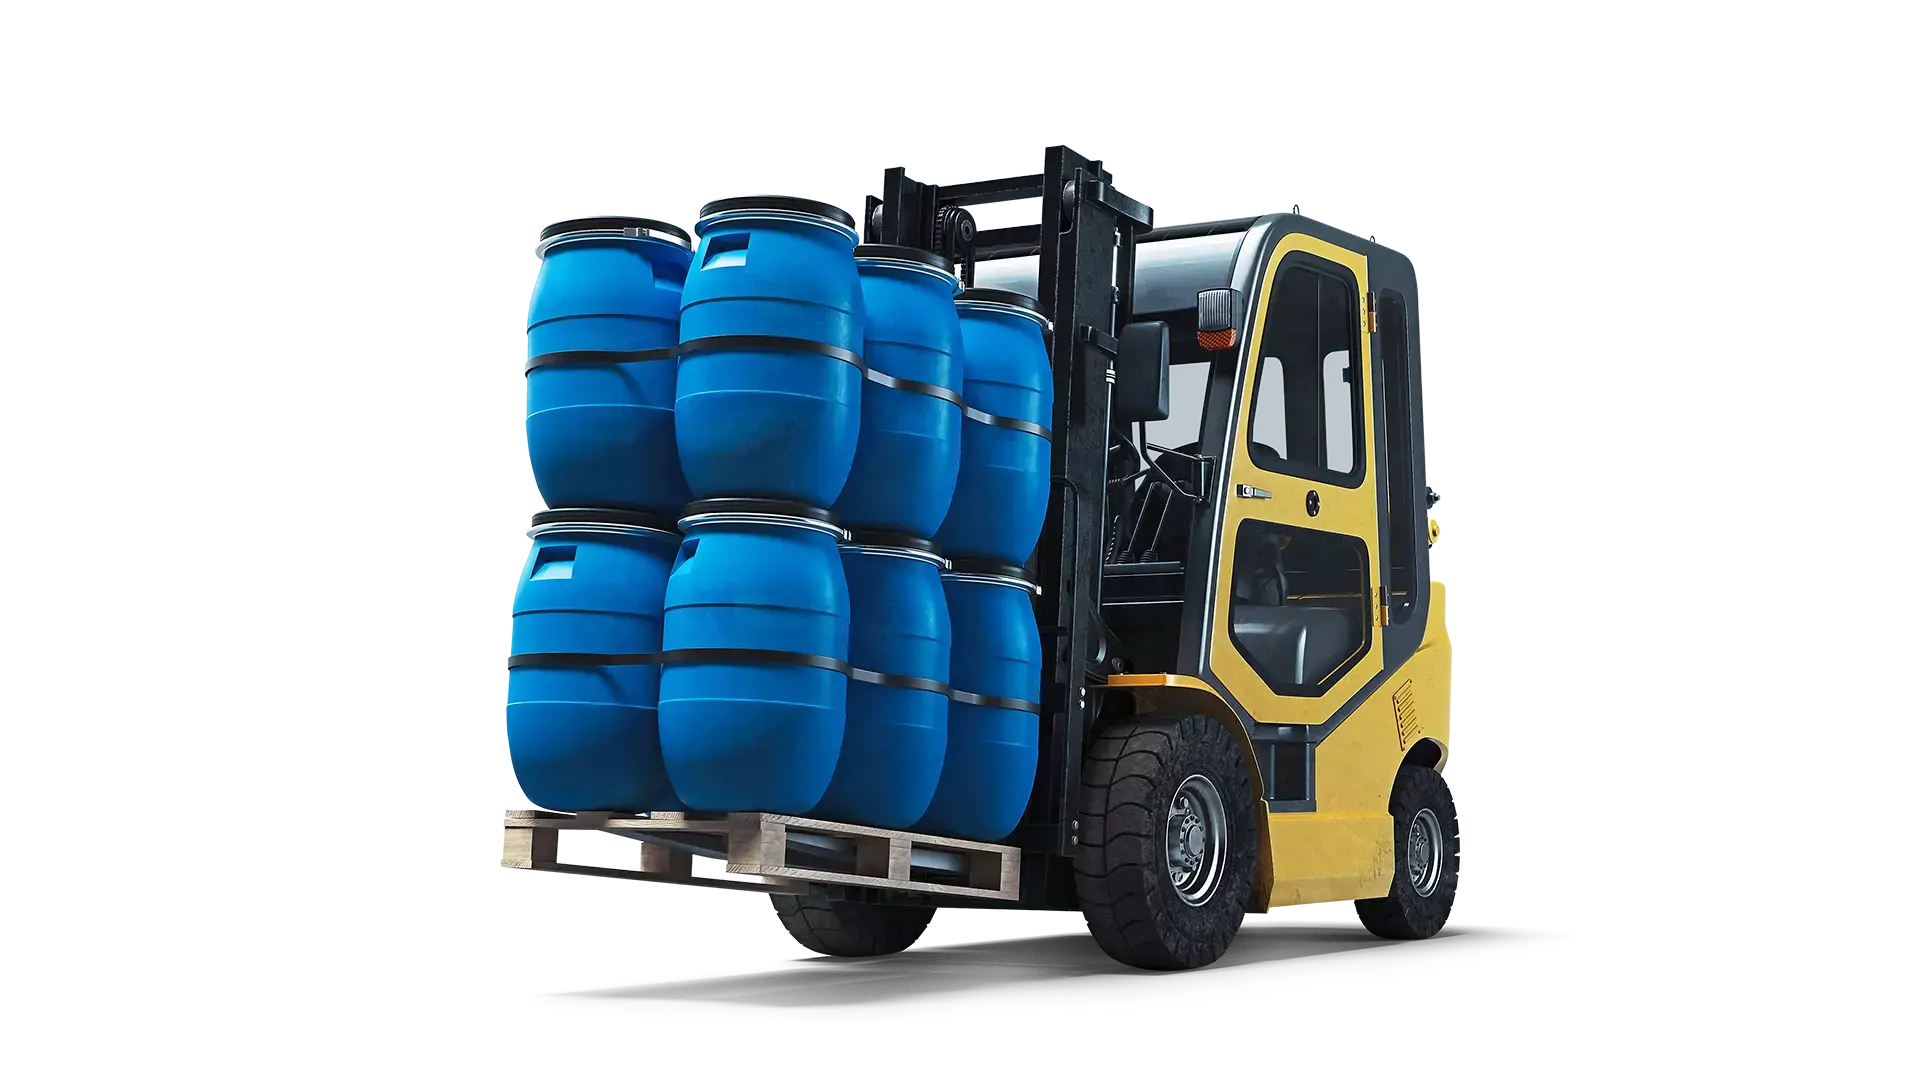 Forklift with chemical barrels